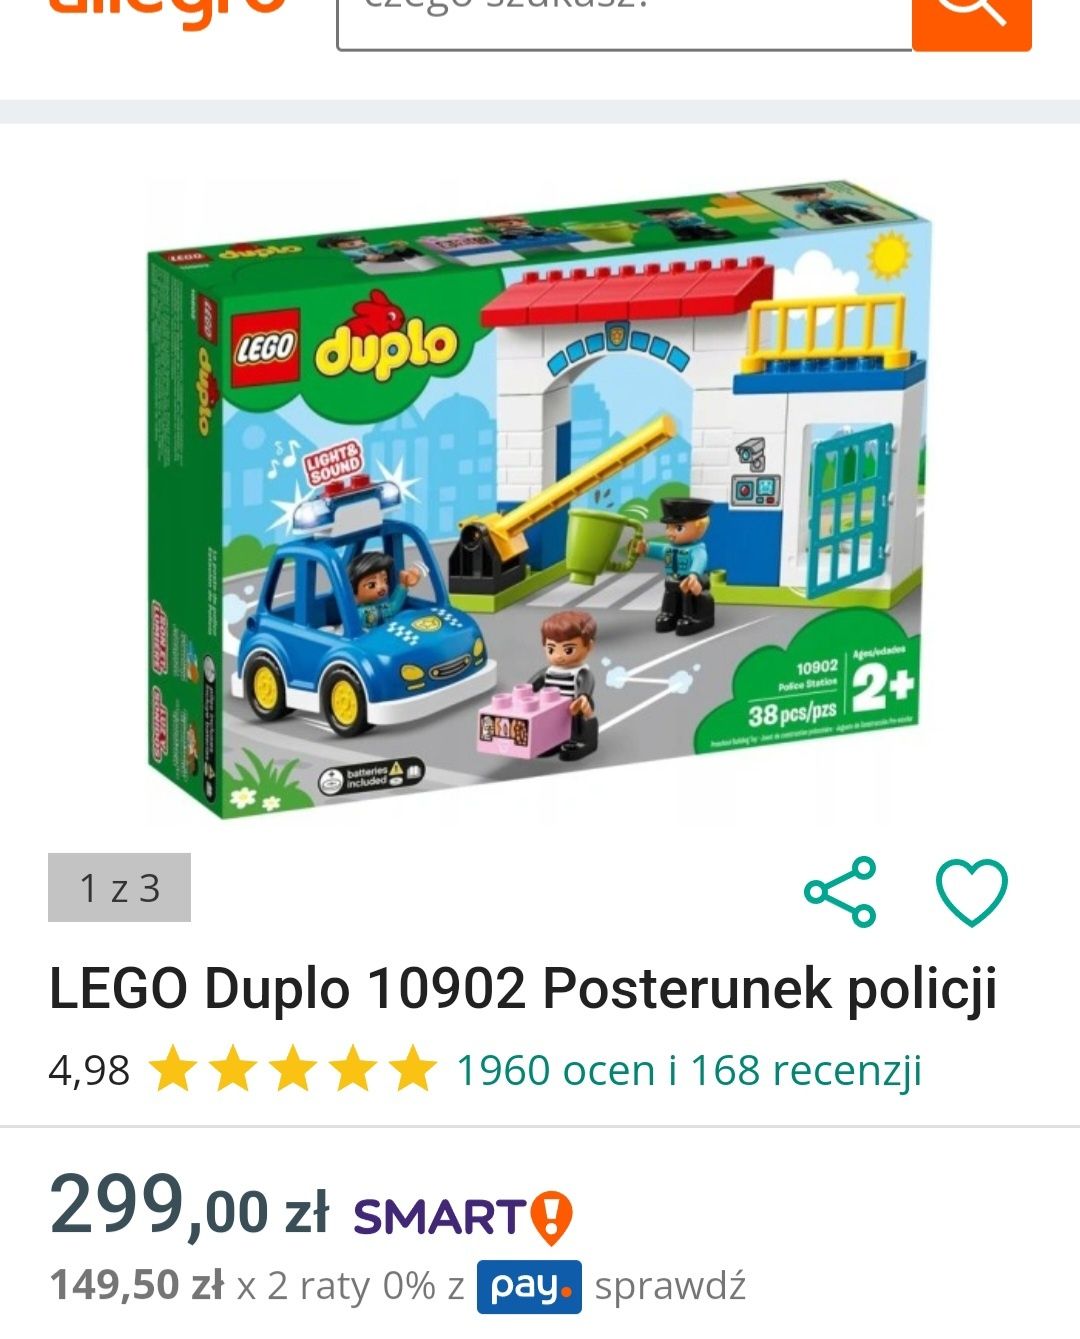 Lego duplo Posterunek policji